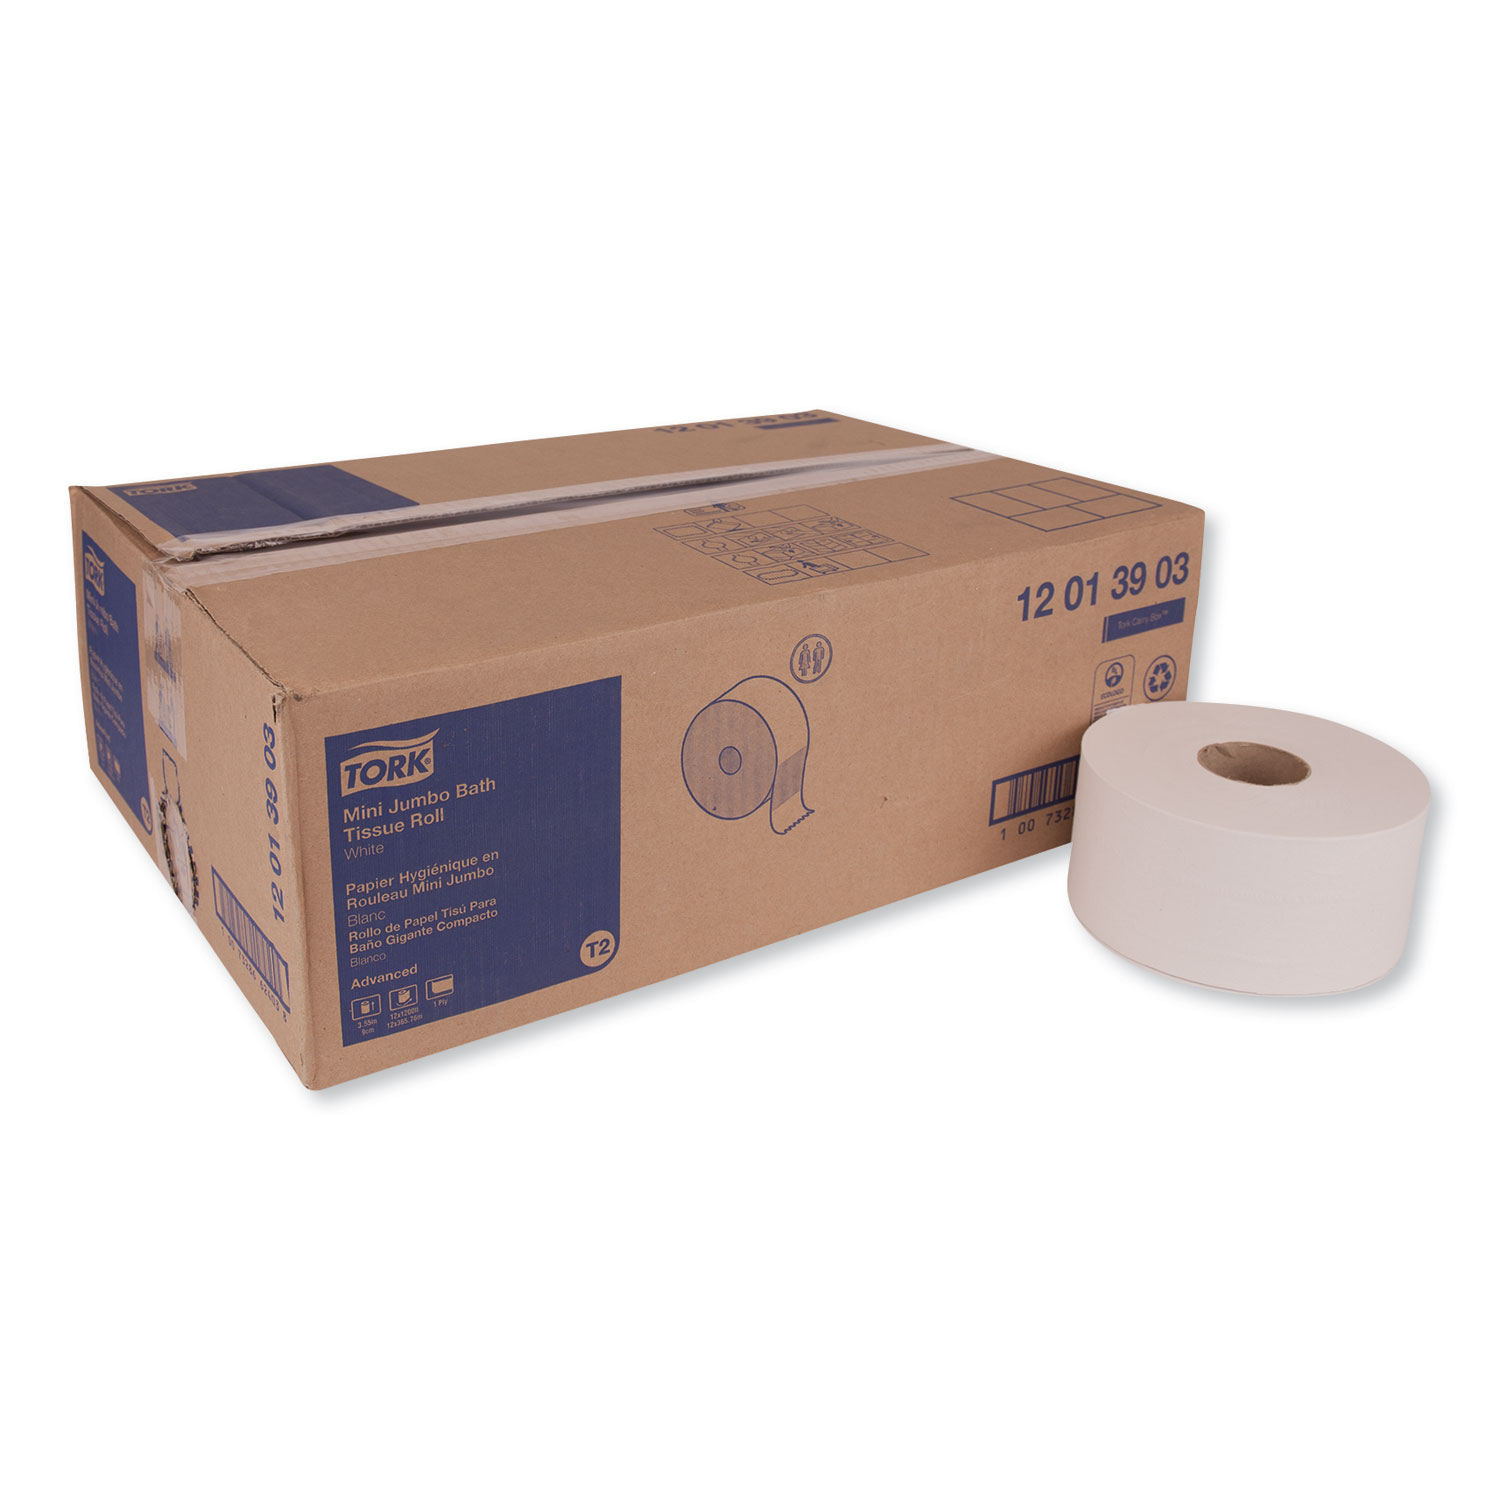  Tork 12013903 Advanced Jumbo Bath Tissue, Septic Safe, 1-Ply, White, 3.48 x 1200 ft ,12 Rolls/Carton (TRK12013903) 